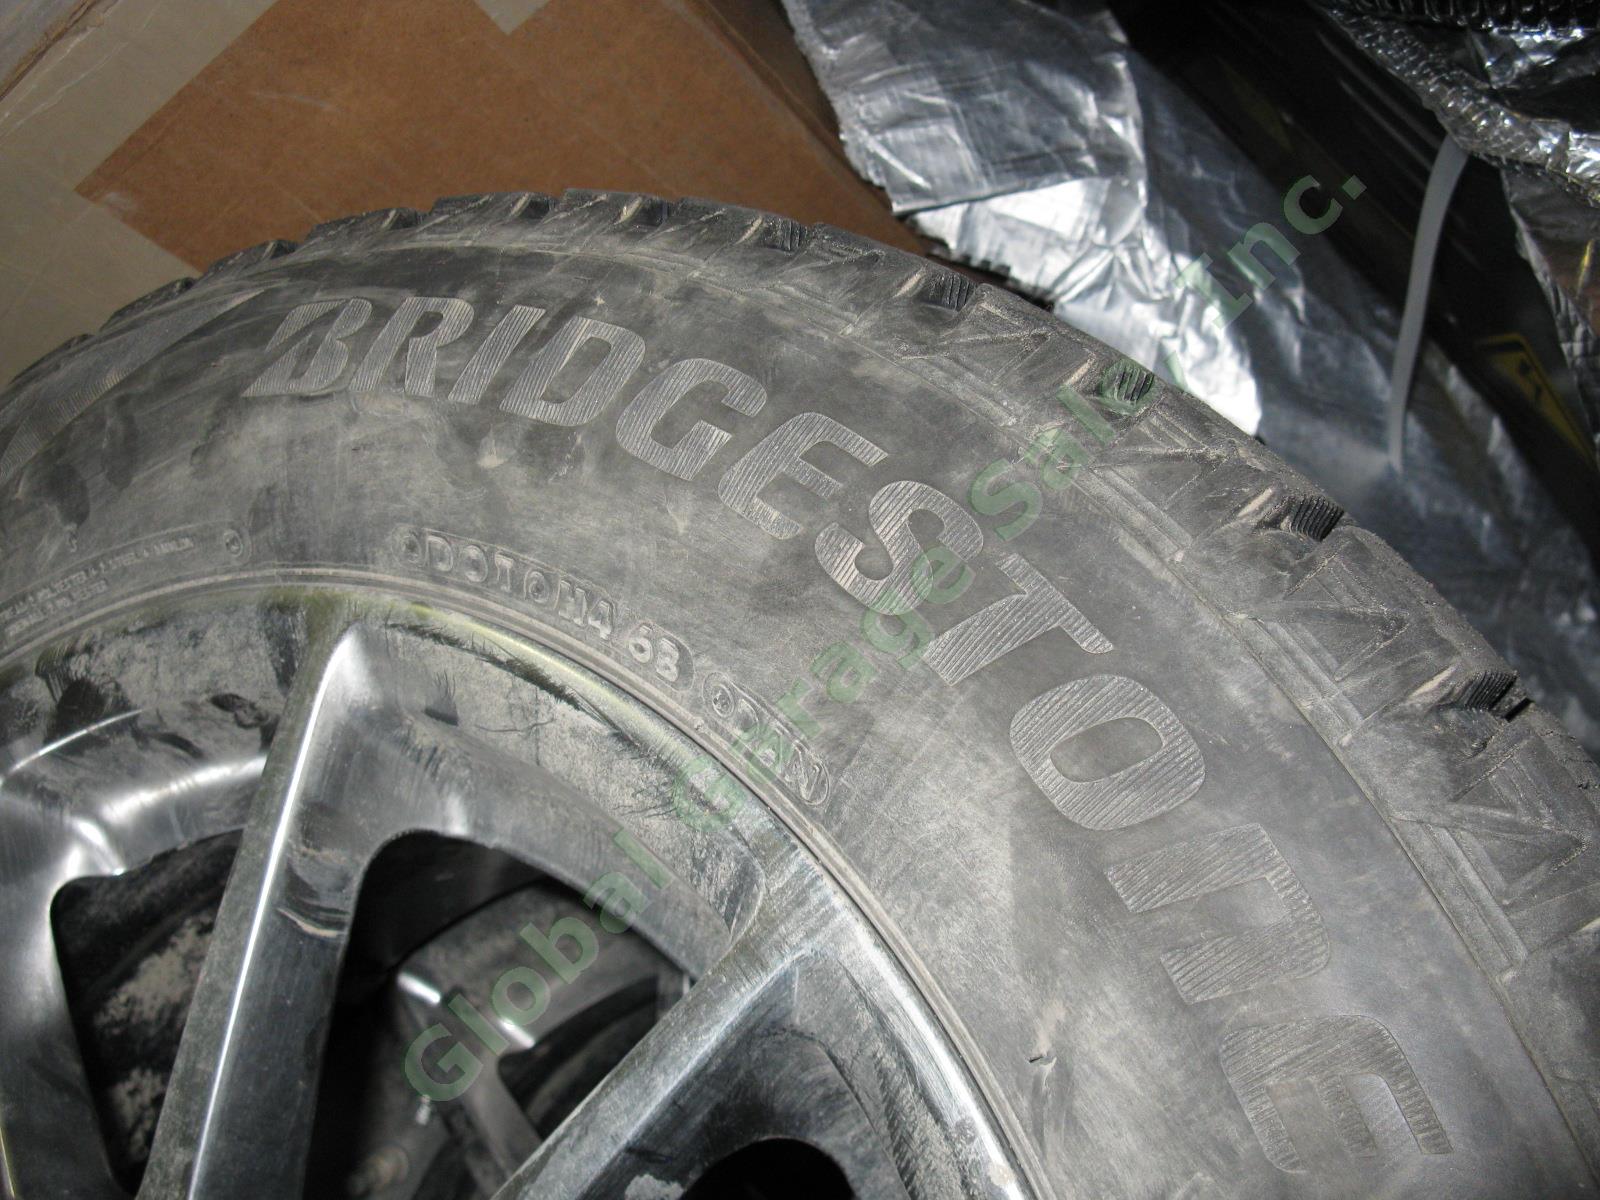 4 Bridgestone Blizzak WS80 235/55R17 Winter Snow Tires On 17" Sport Edition Rims 3